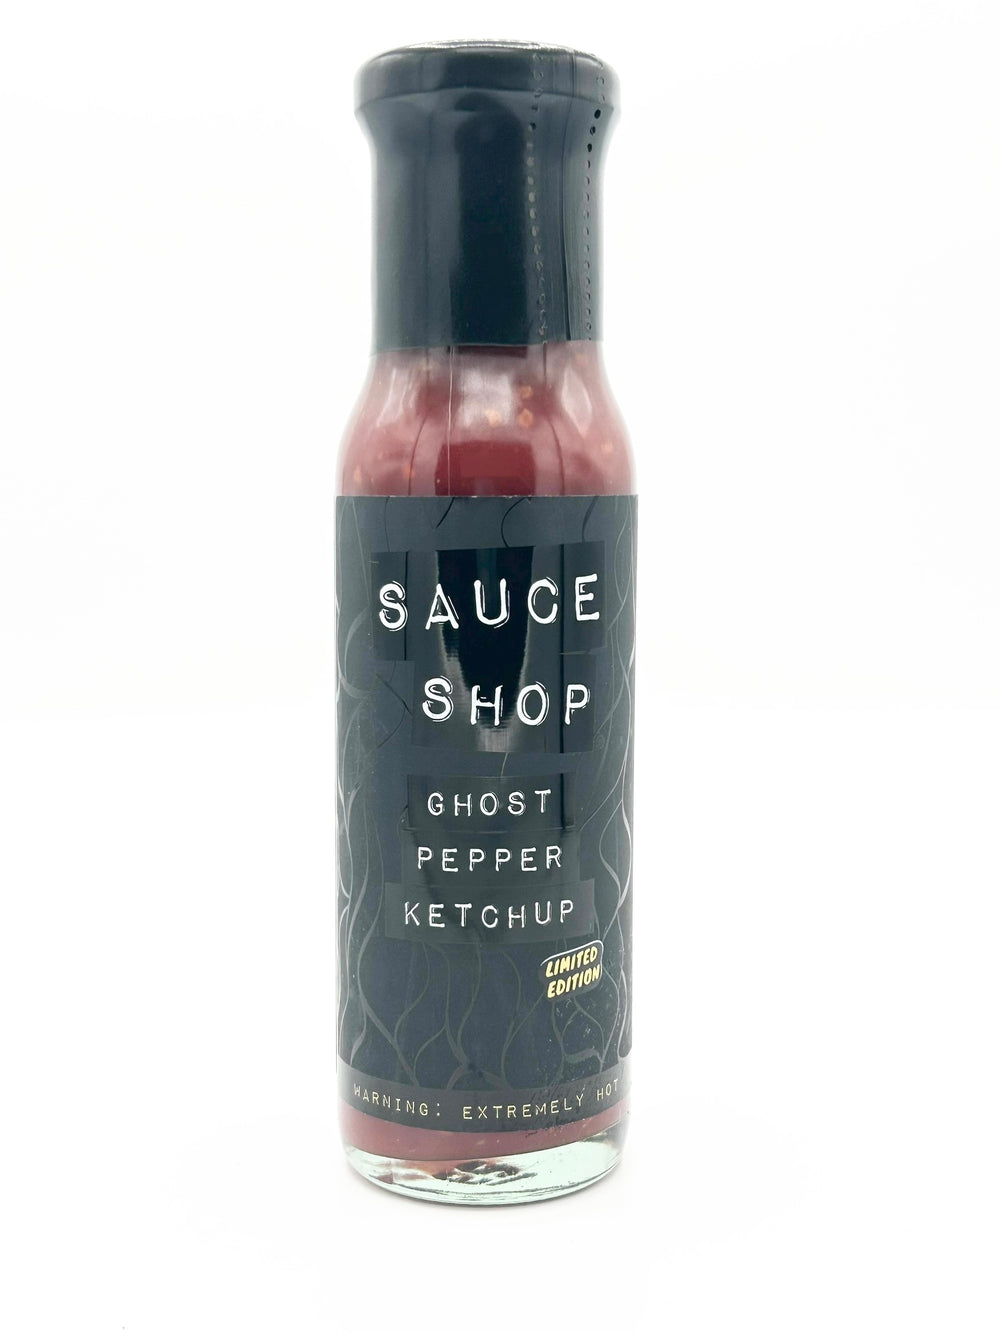 Sauce Shop Ghost Pepper Ketchup